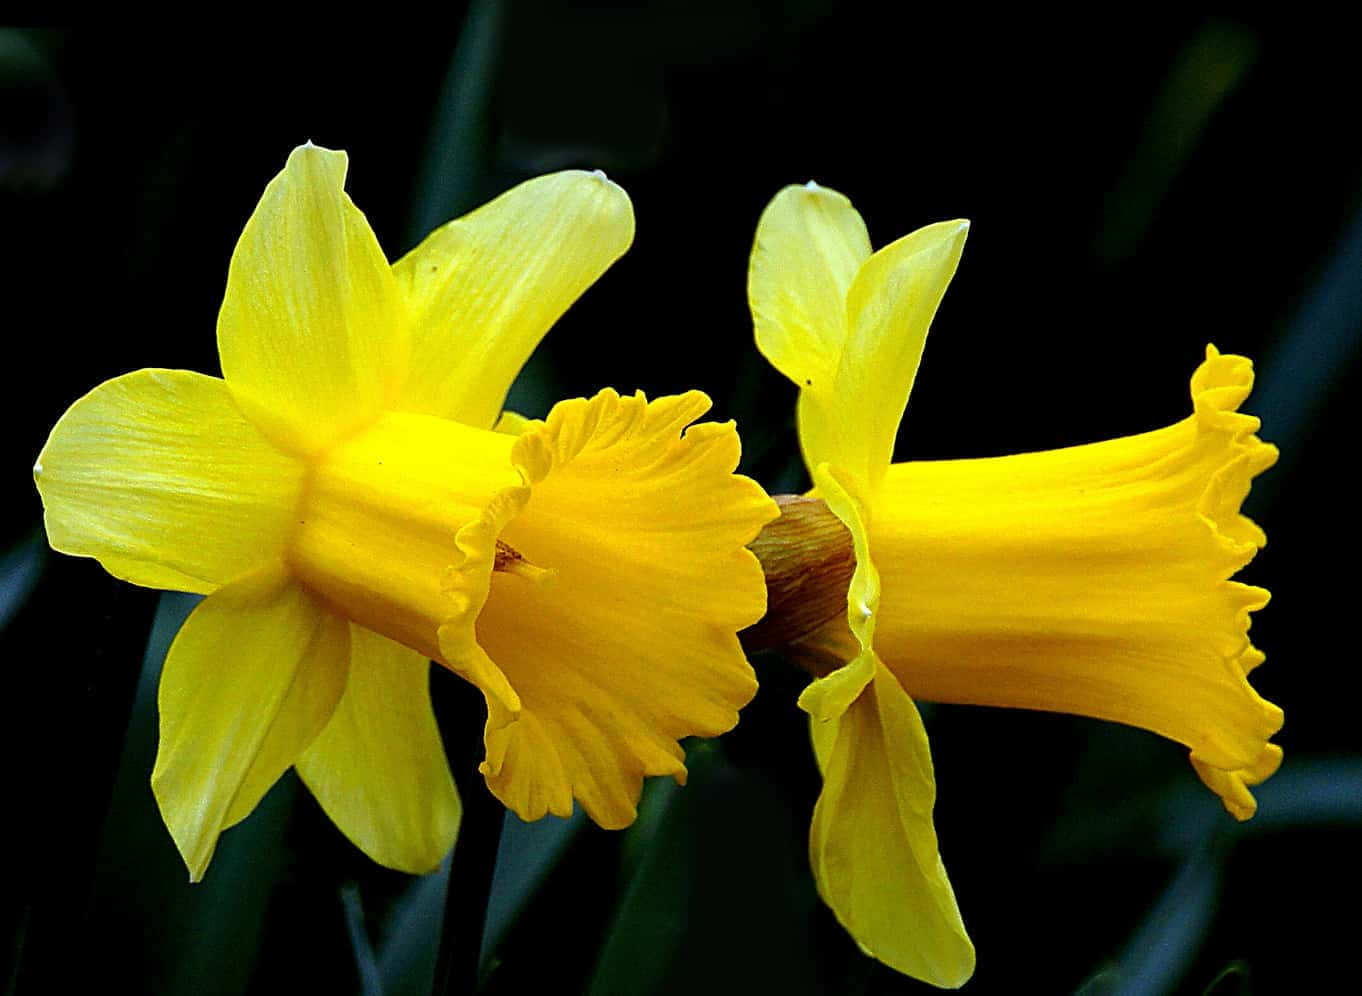 A Blooming Daffodil